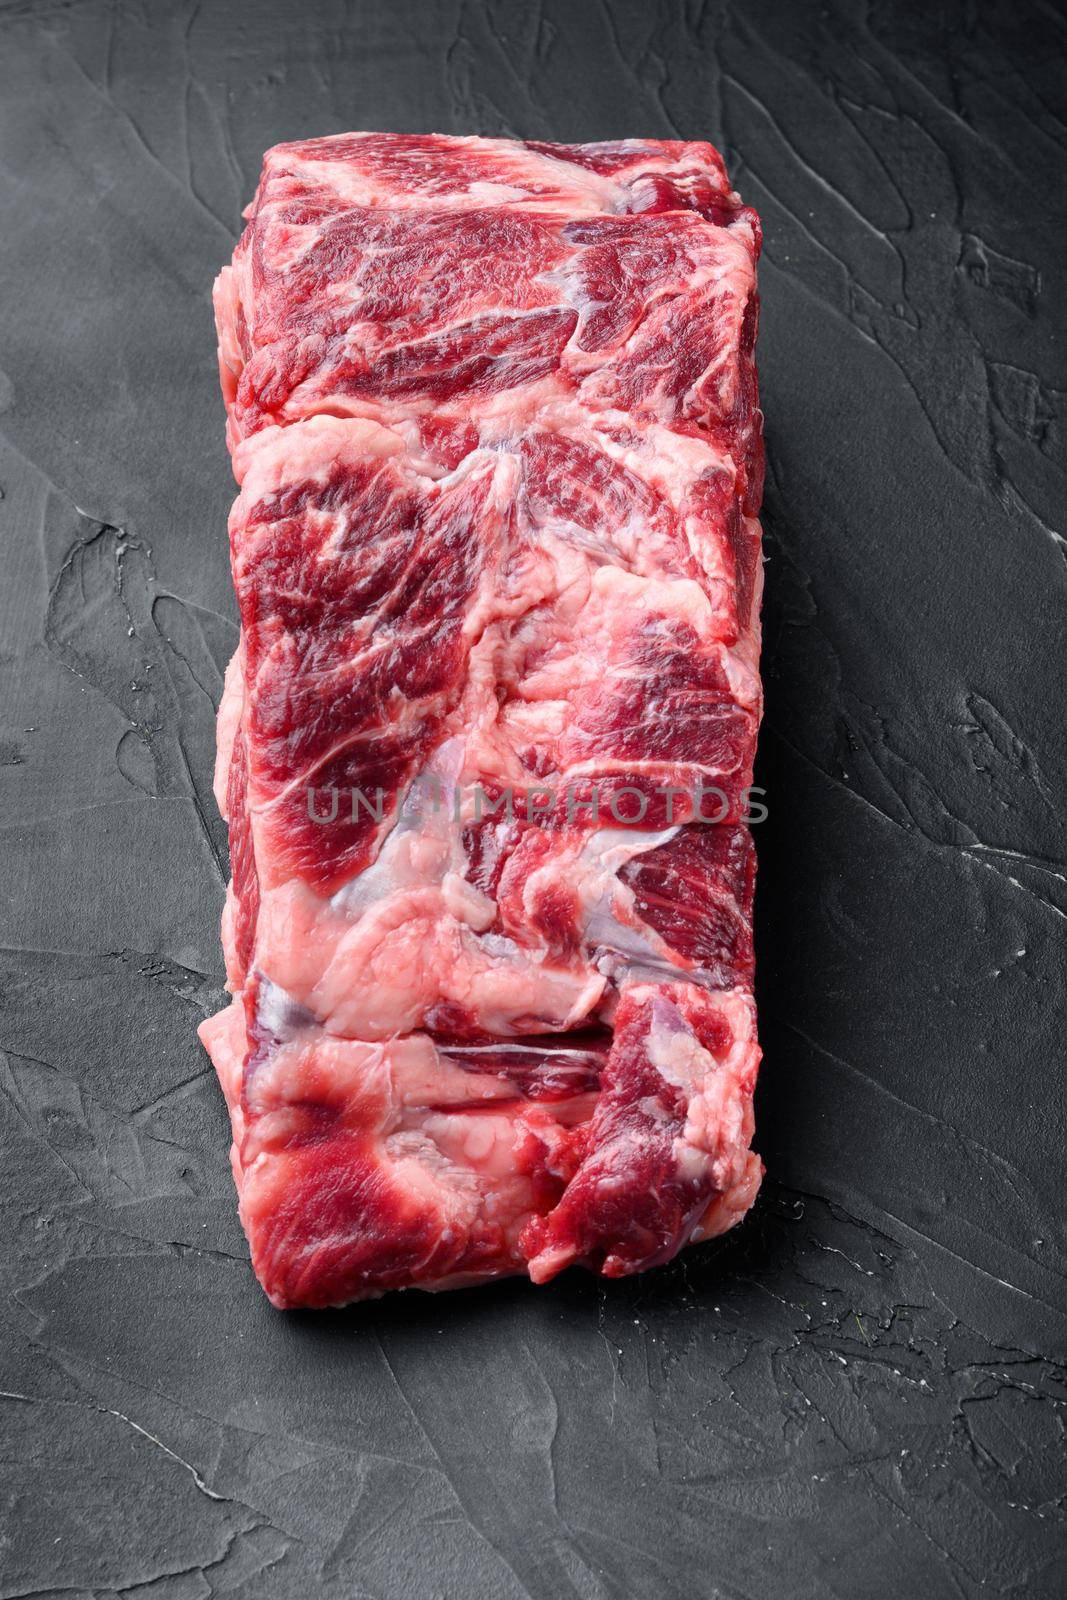 Rib eye beef meat cut raw, on black stone background, top view flat lay by Ilianesolenyi